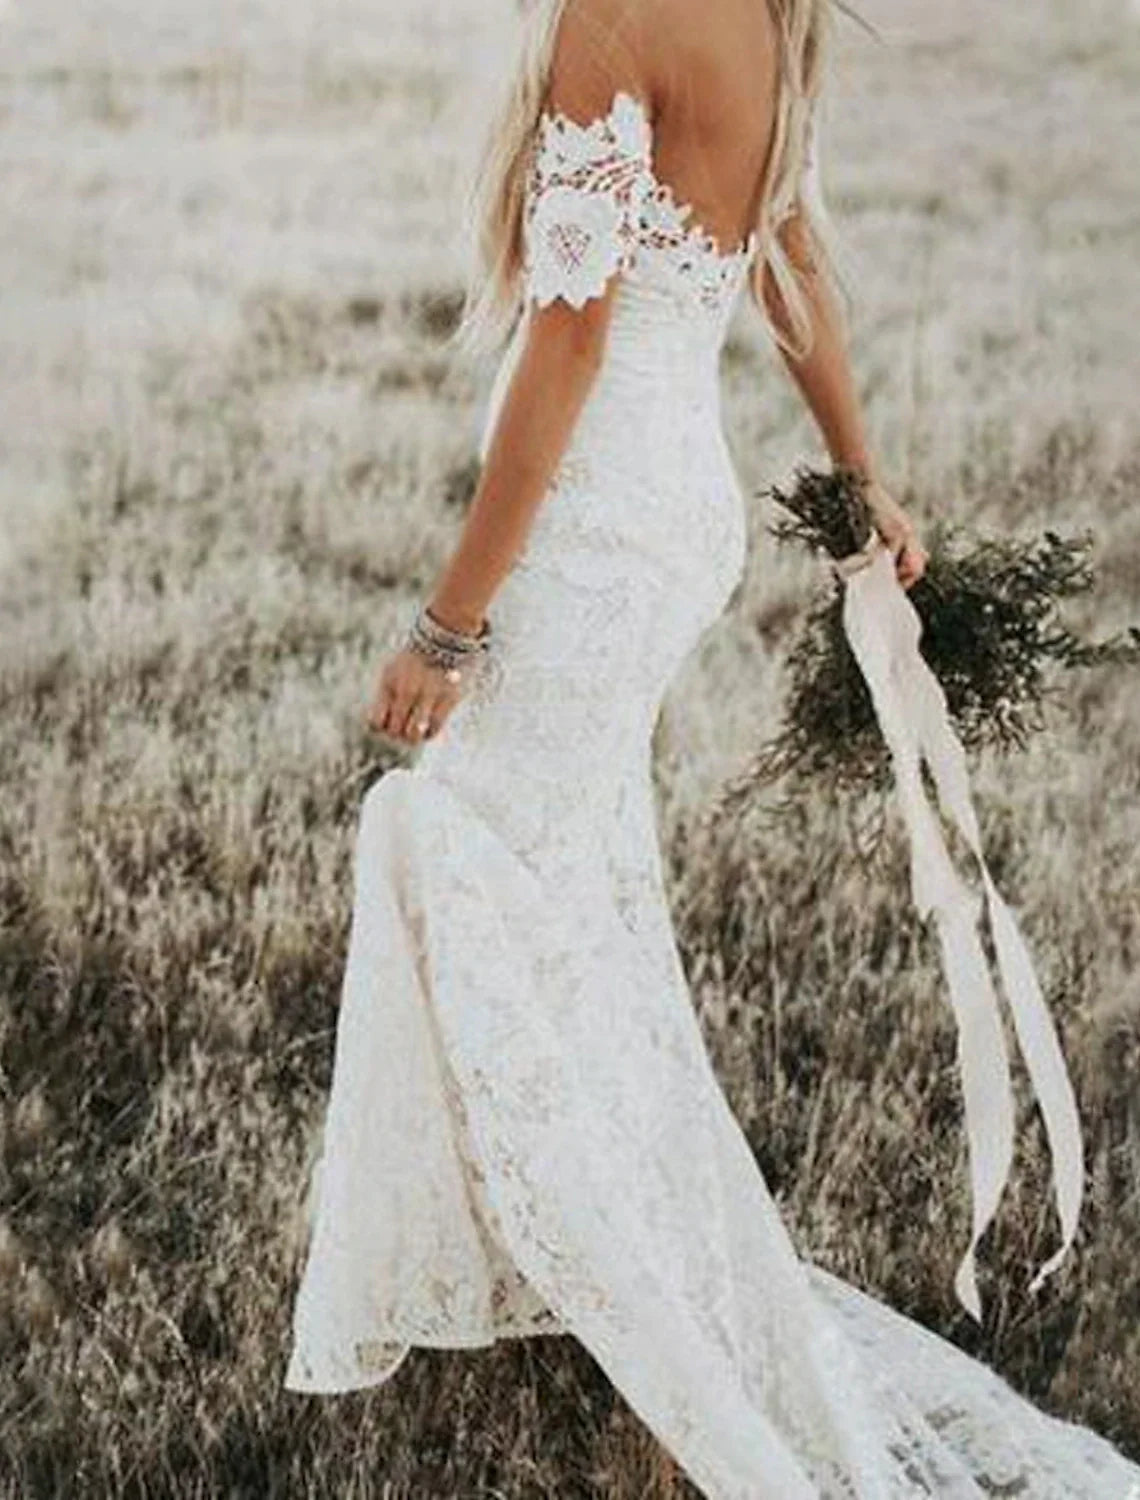 Beach Boho Wedding Dresses Chapel Train Mermaid / Trumpet Cap Sleeve Off Shoulder Lace With Appliques Solid Color